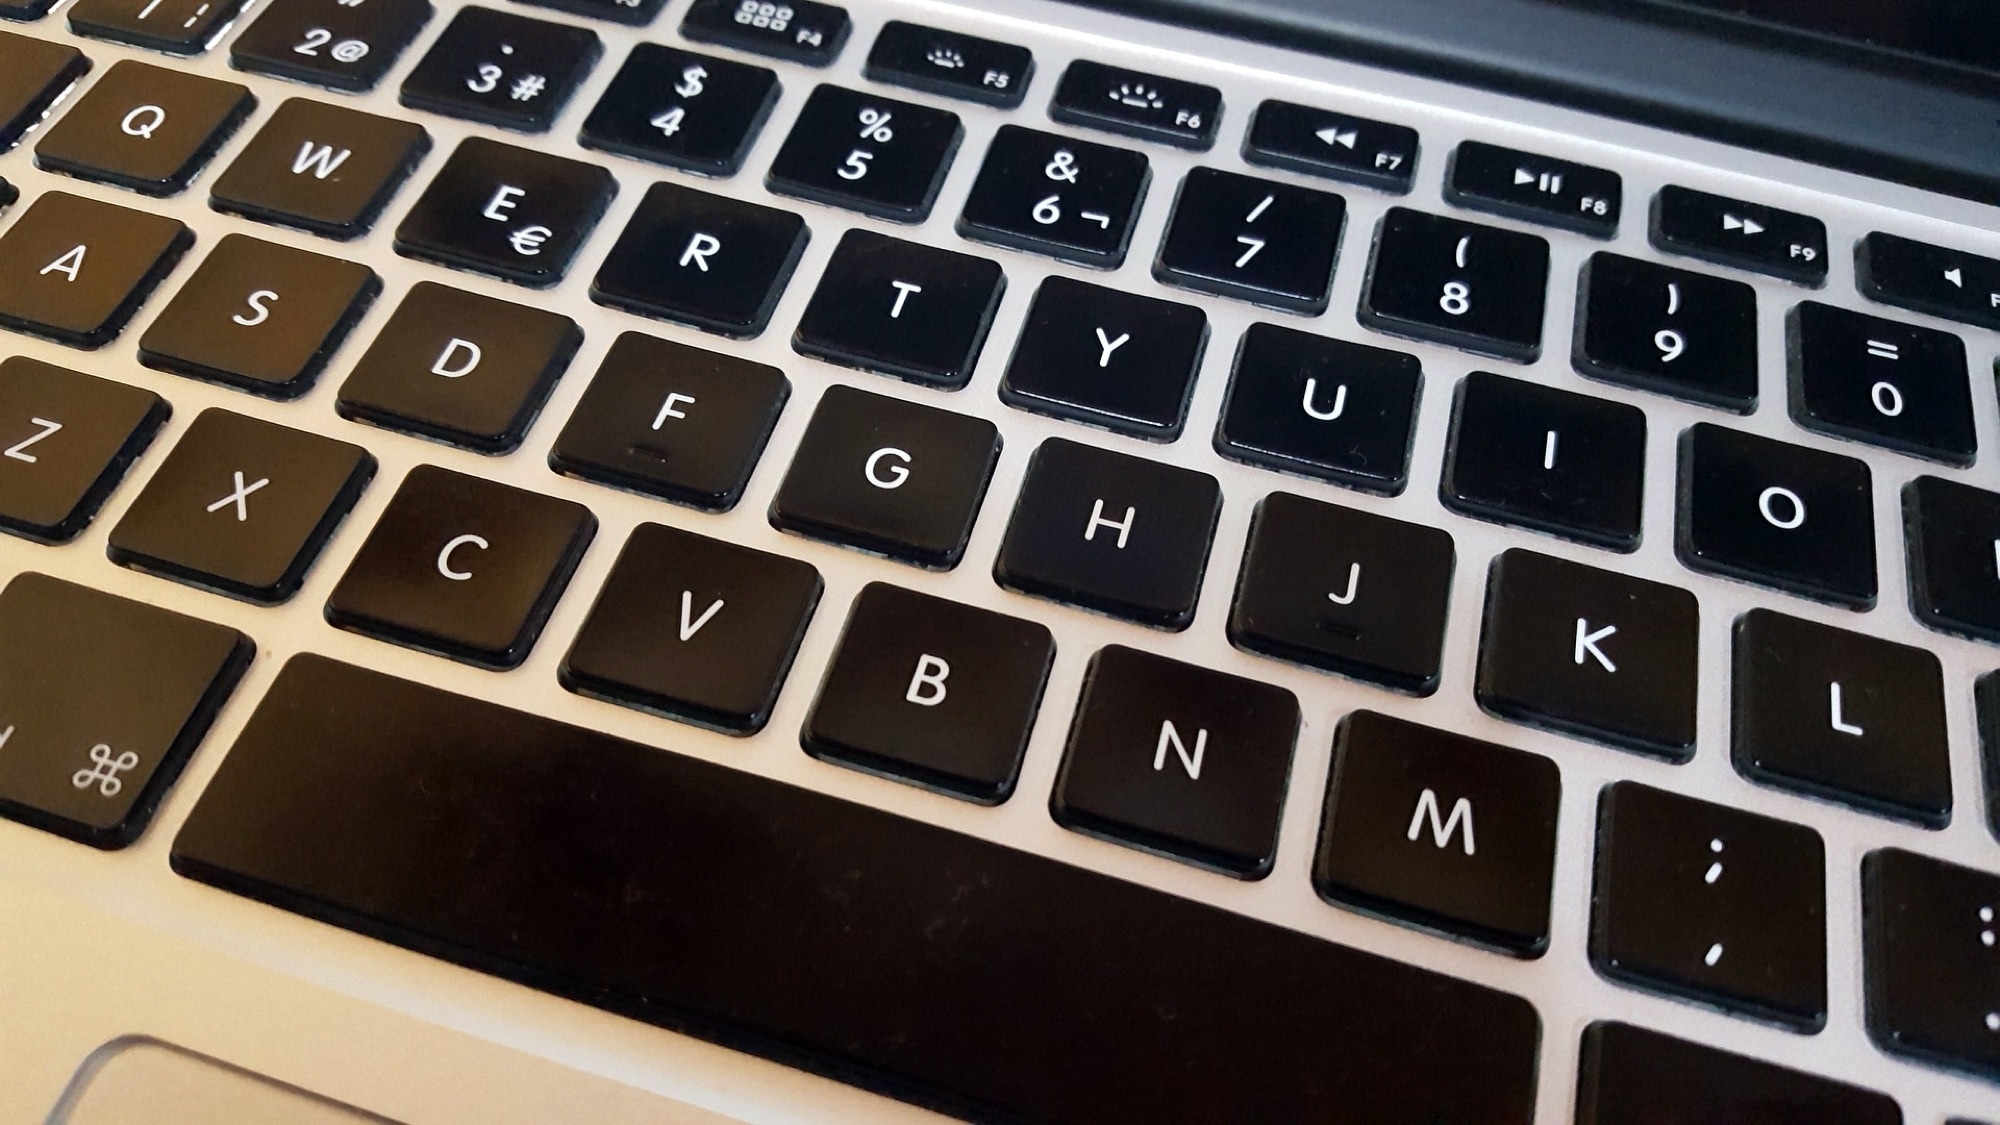 MacBook keyboard - News app keyboard shortcuts